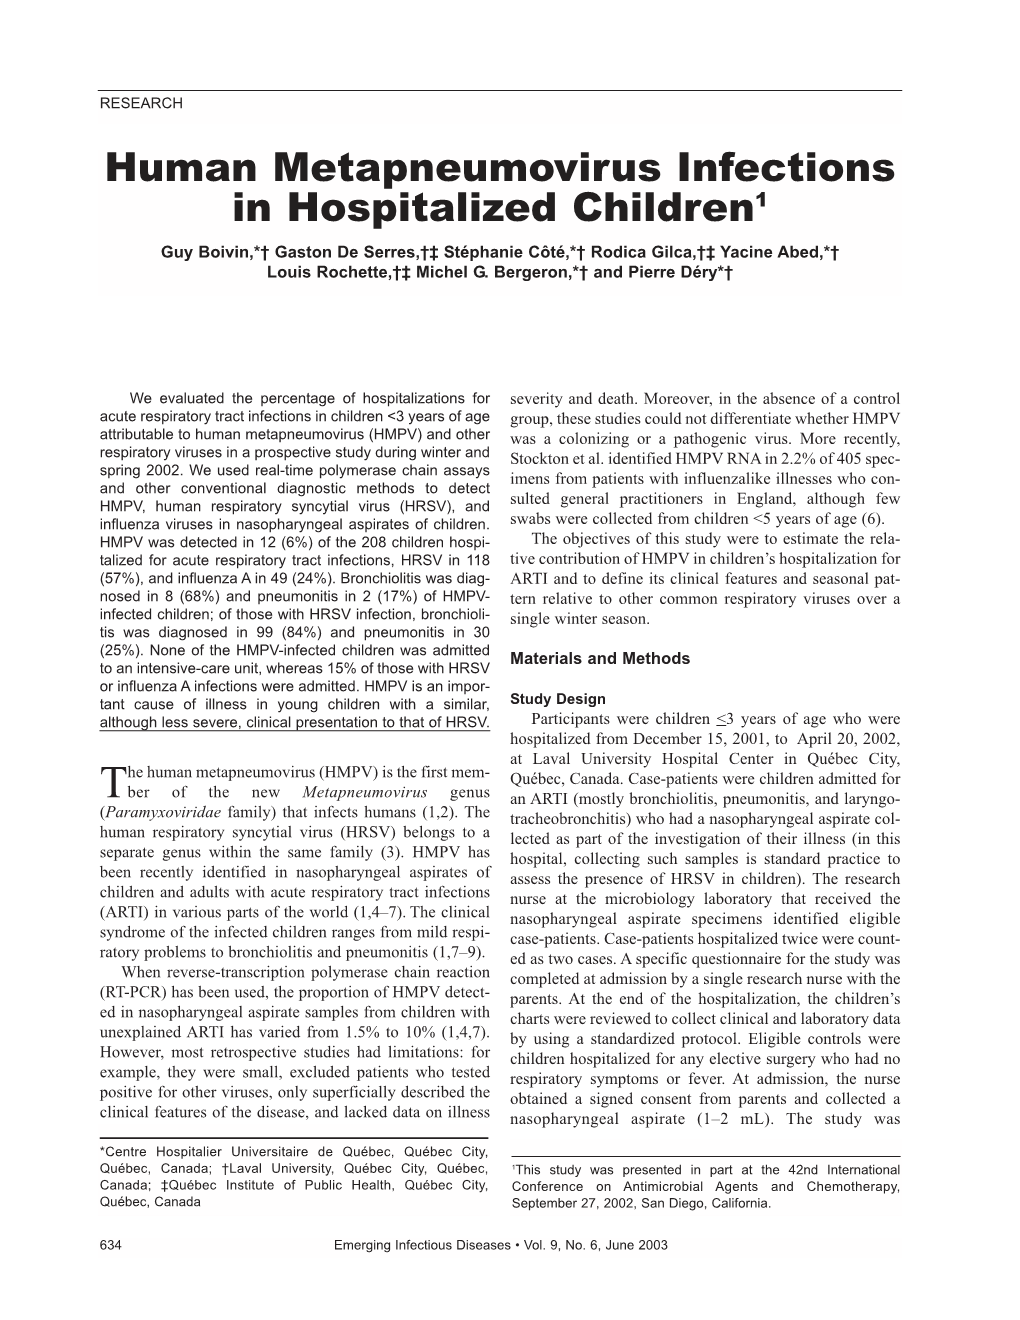 Human Metapneumovirus Infections in Hospitalized Children1